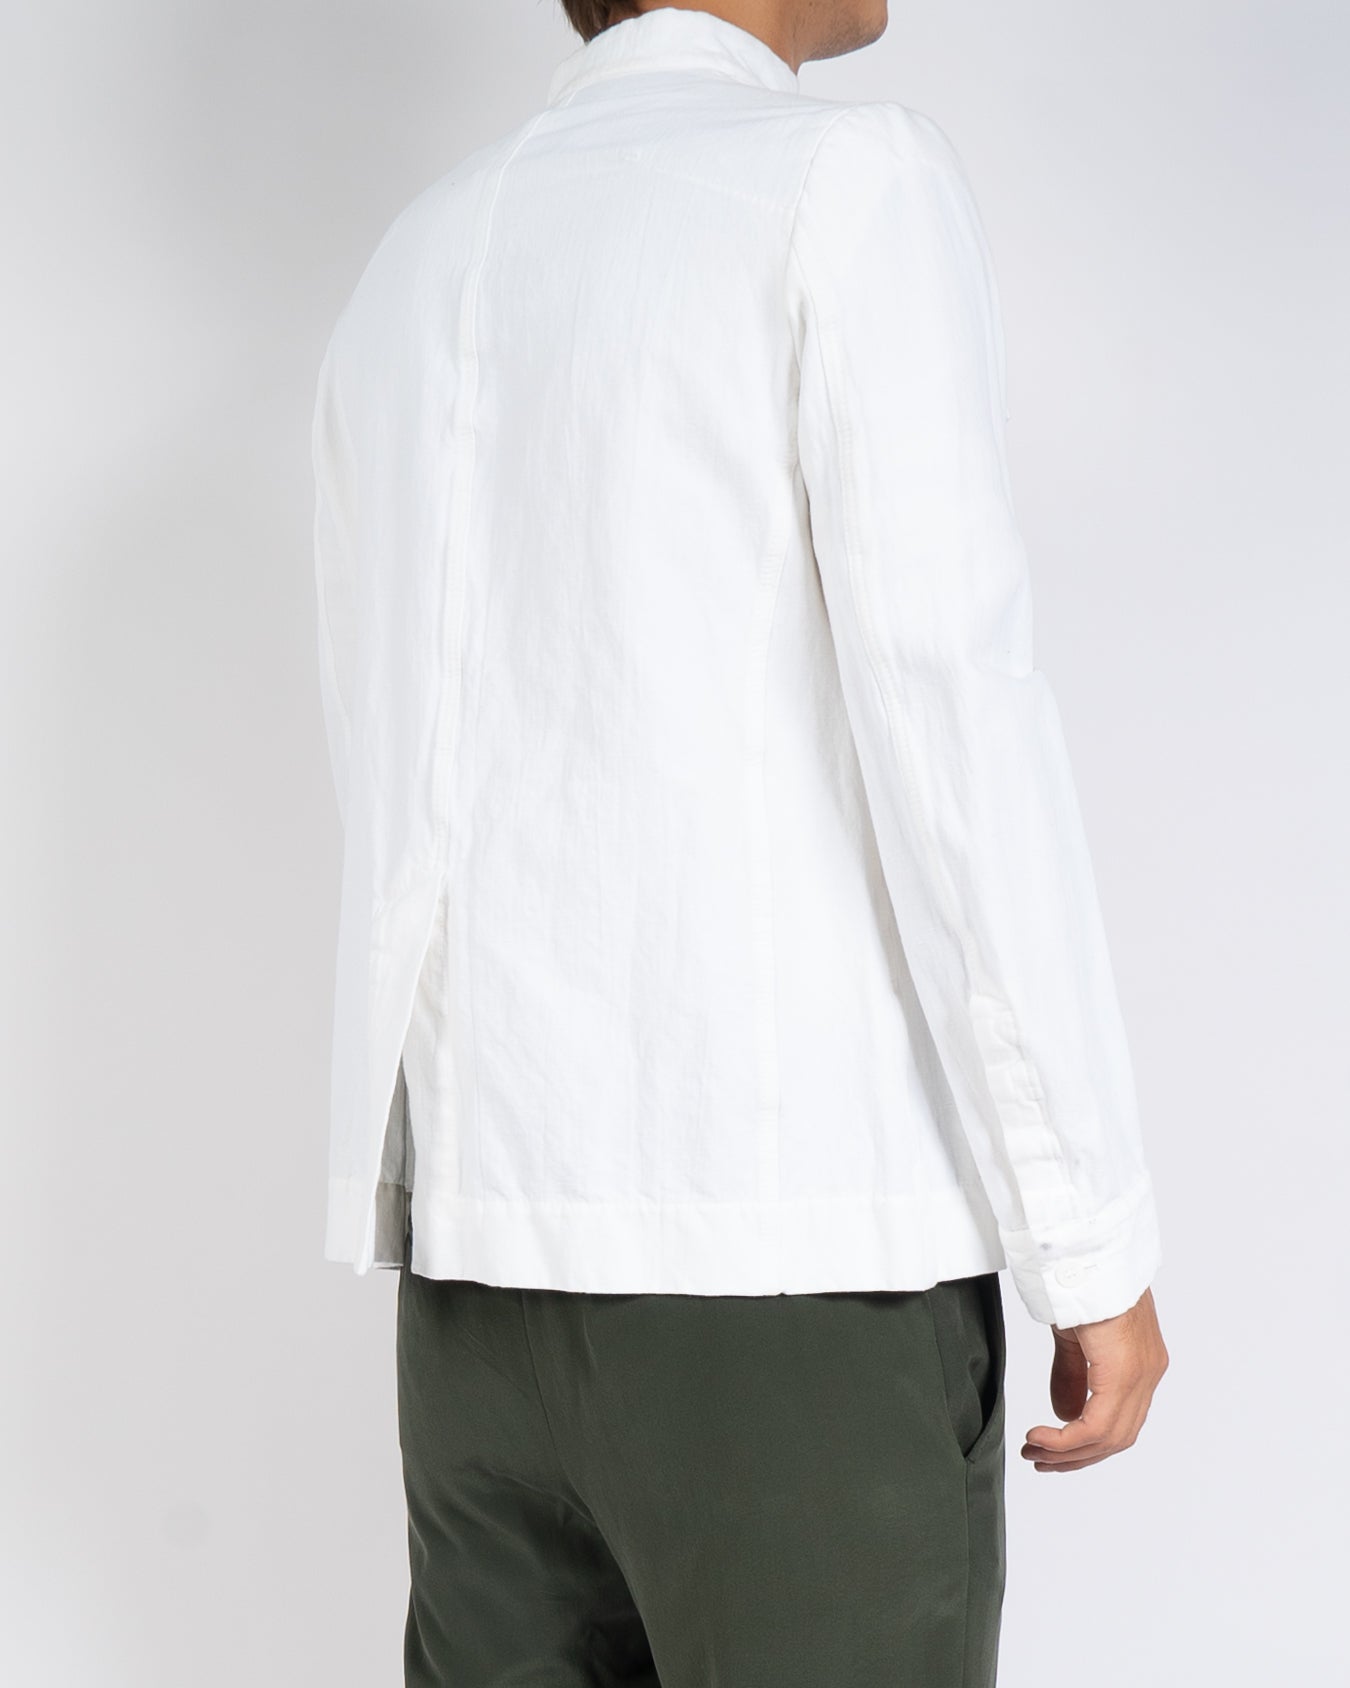 SS17 White Cotton Military Jacket Sample